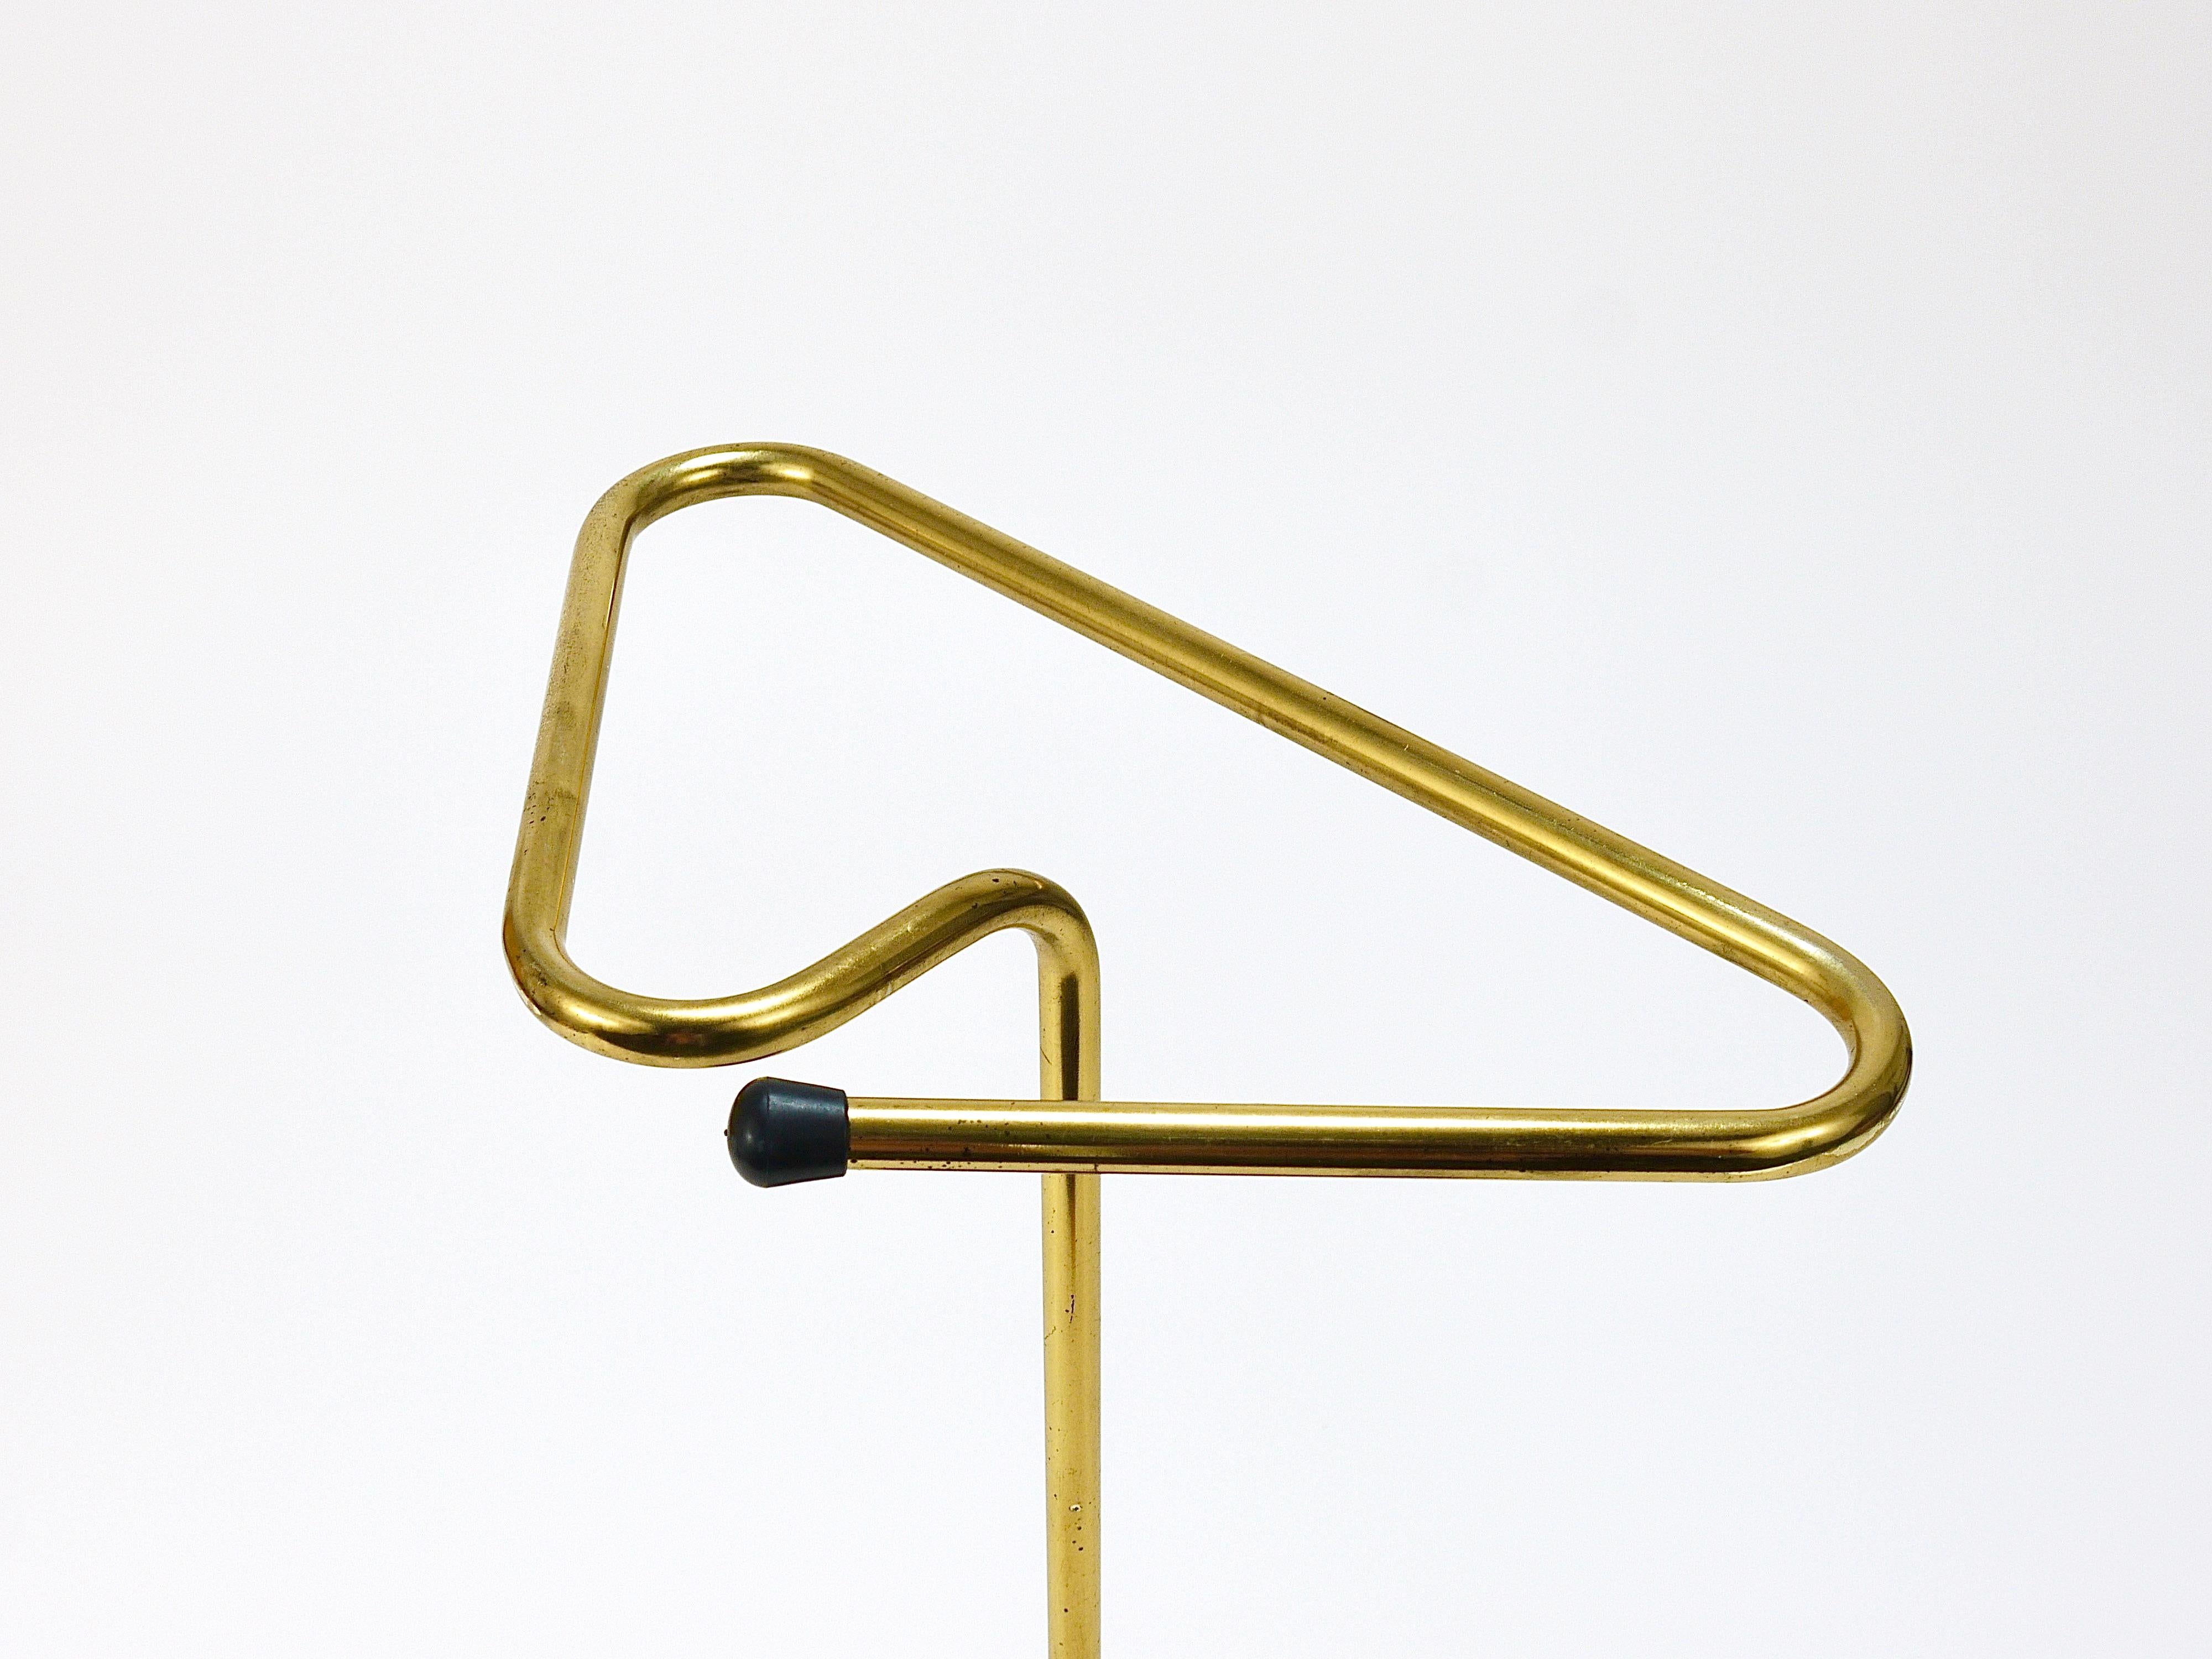 20th Century Midcentury Modern Triangle Umbrella Stand, Brass & Cast Iron, Austria, 1950s For Sale